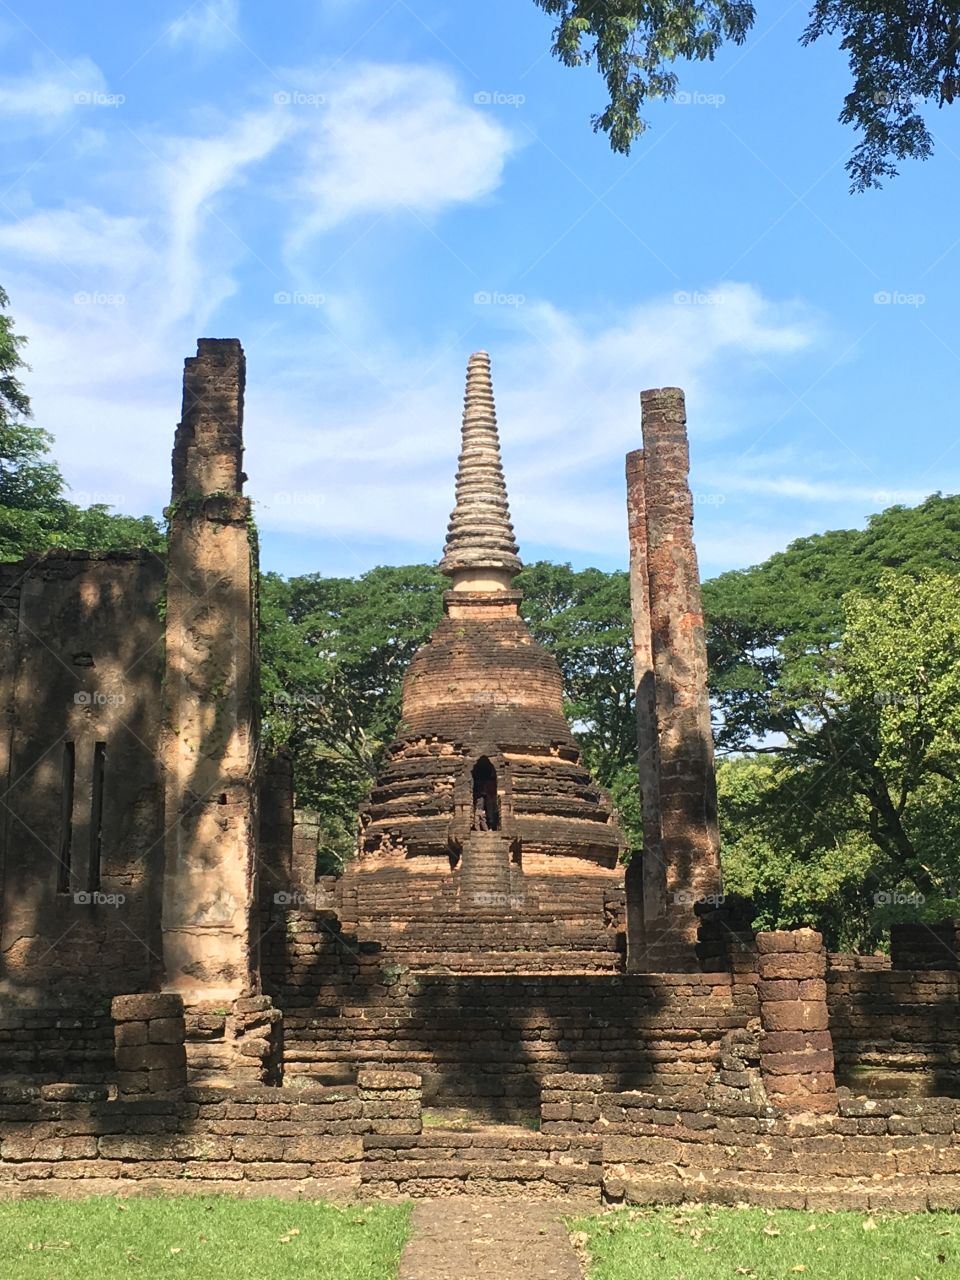 Wat nang phaya temple in Sukhothai, Thailand 